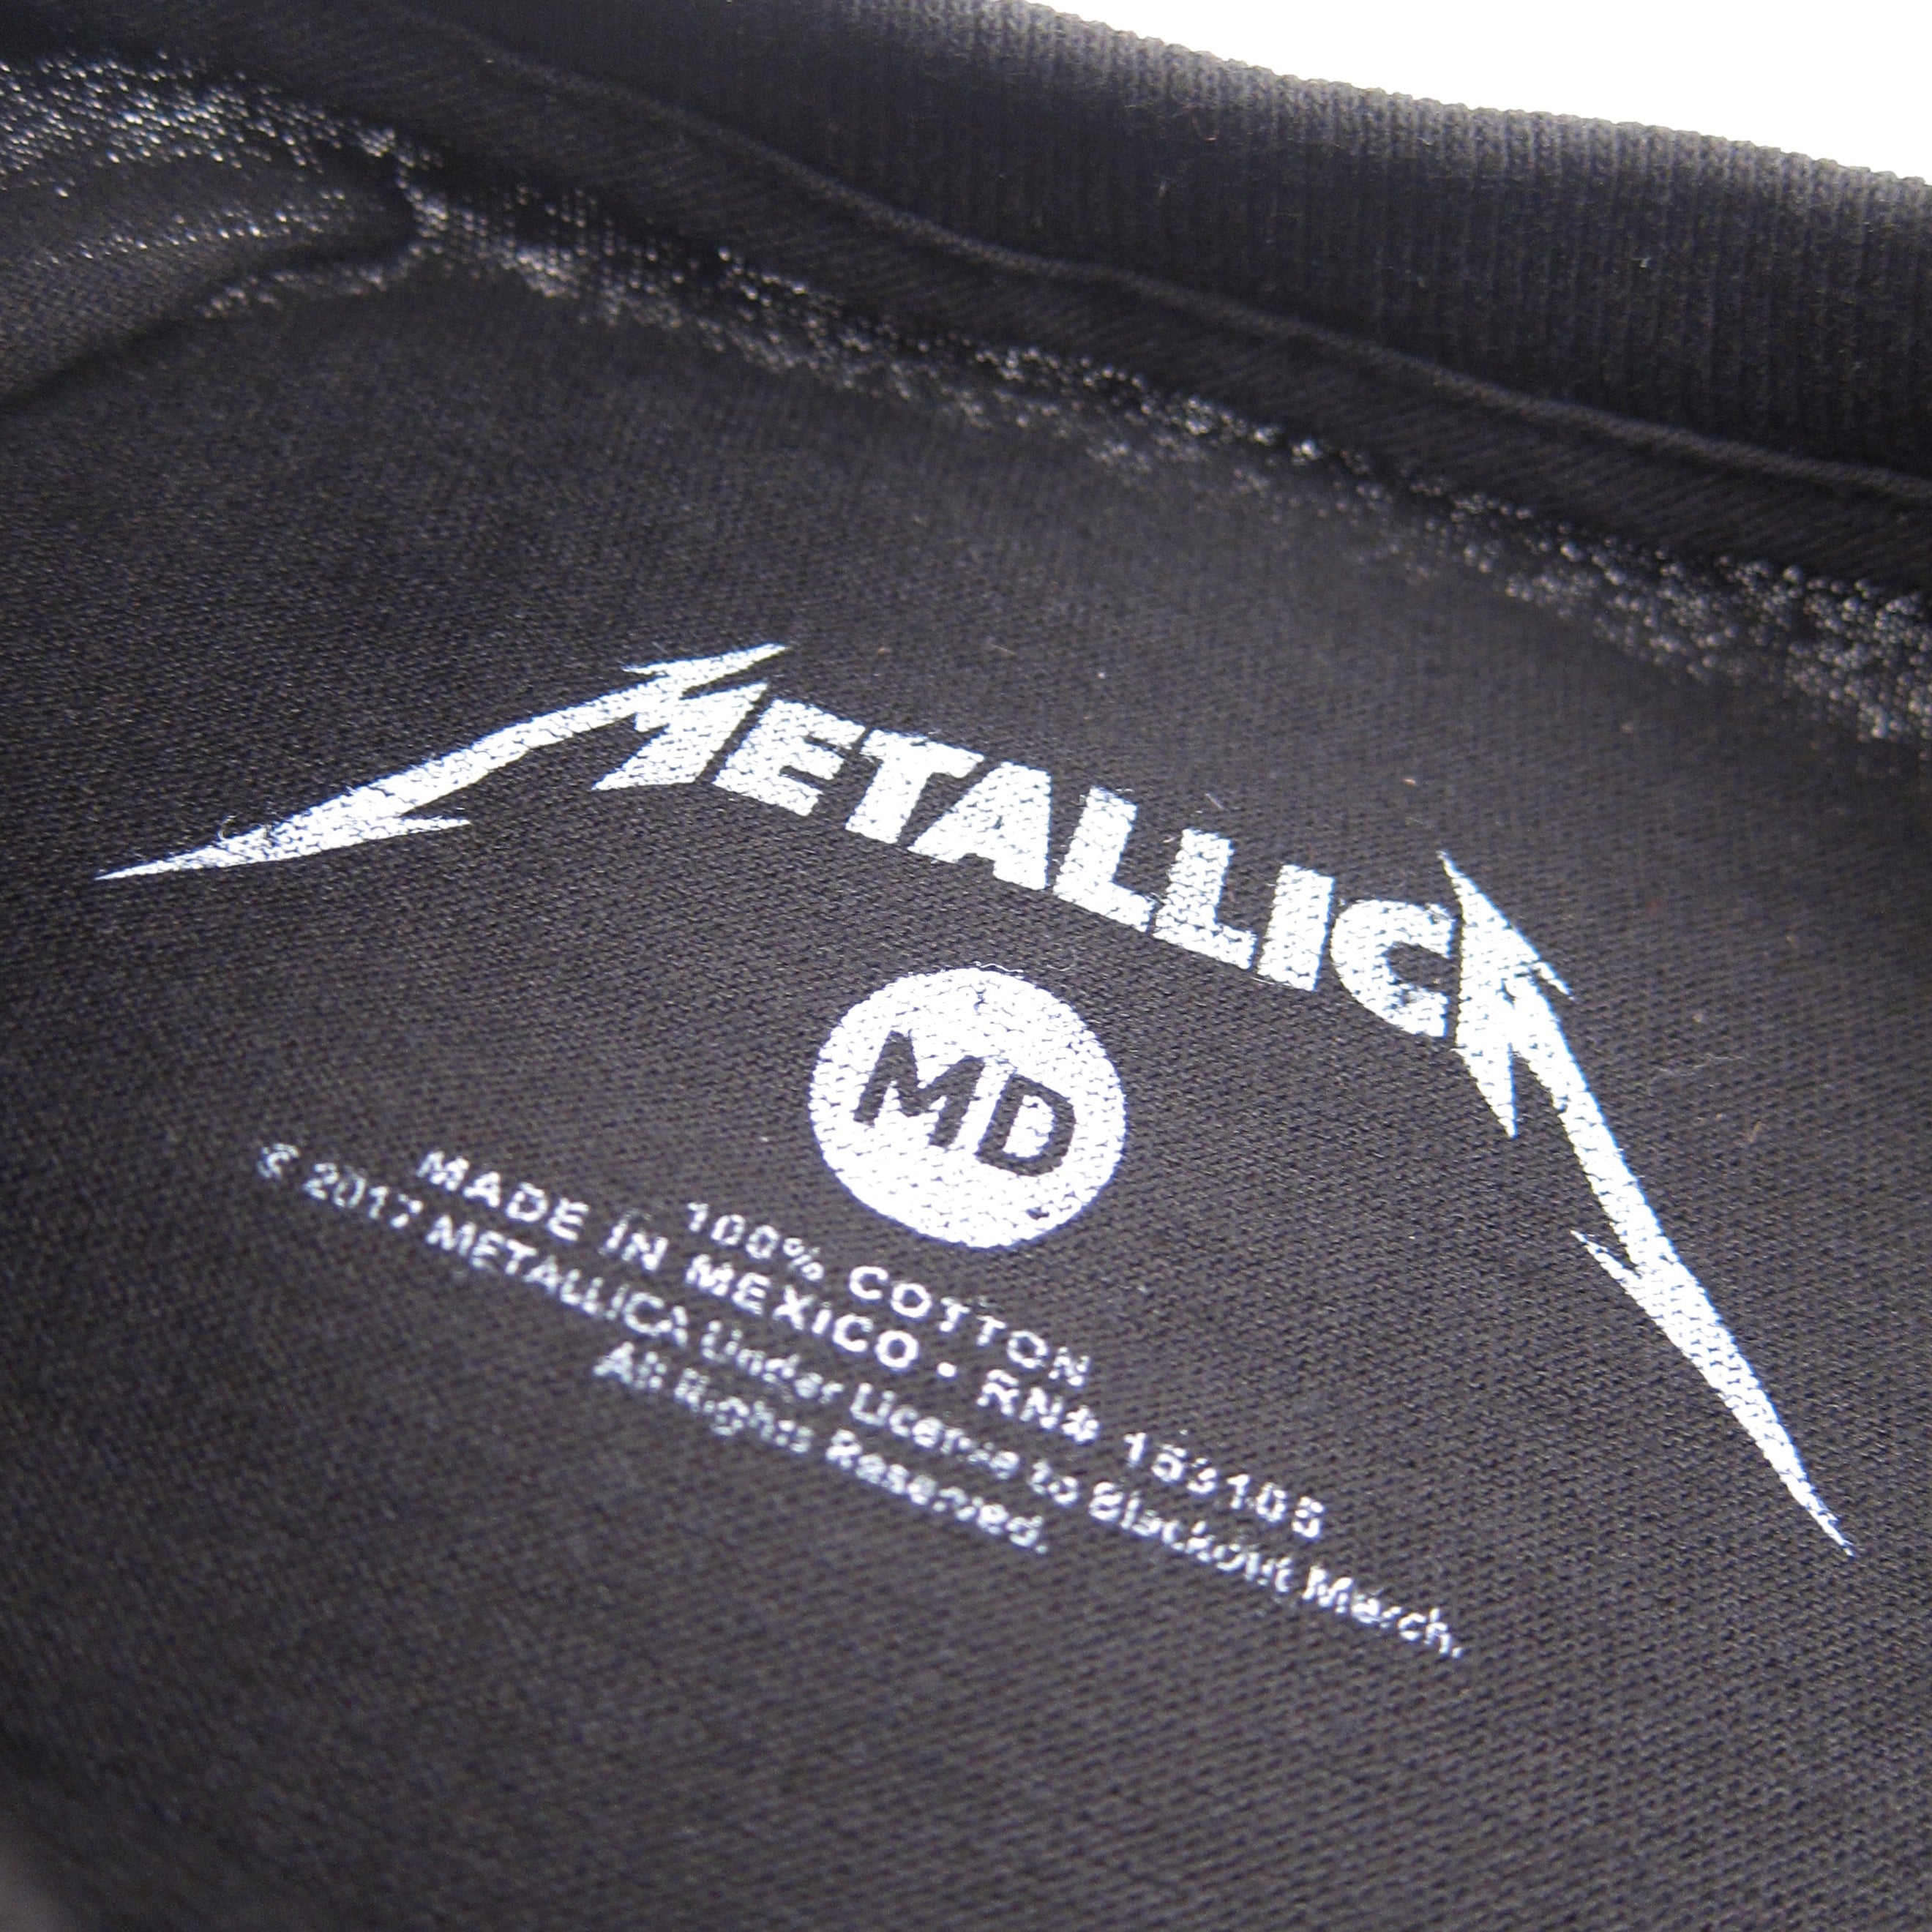 Metallica: And Justice For All Shirt - Black — TurntableLab.com